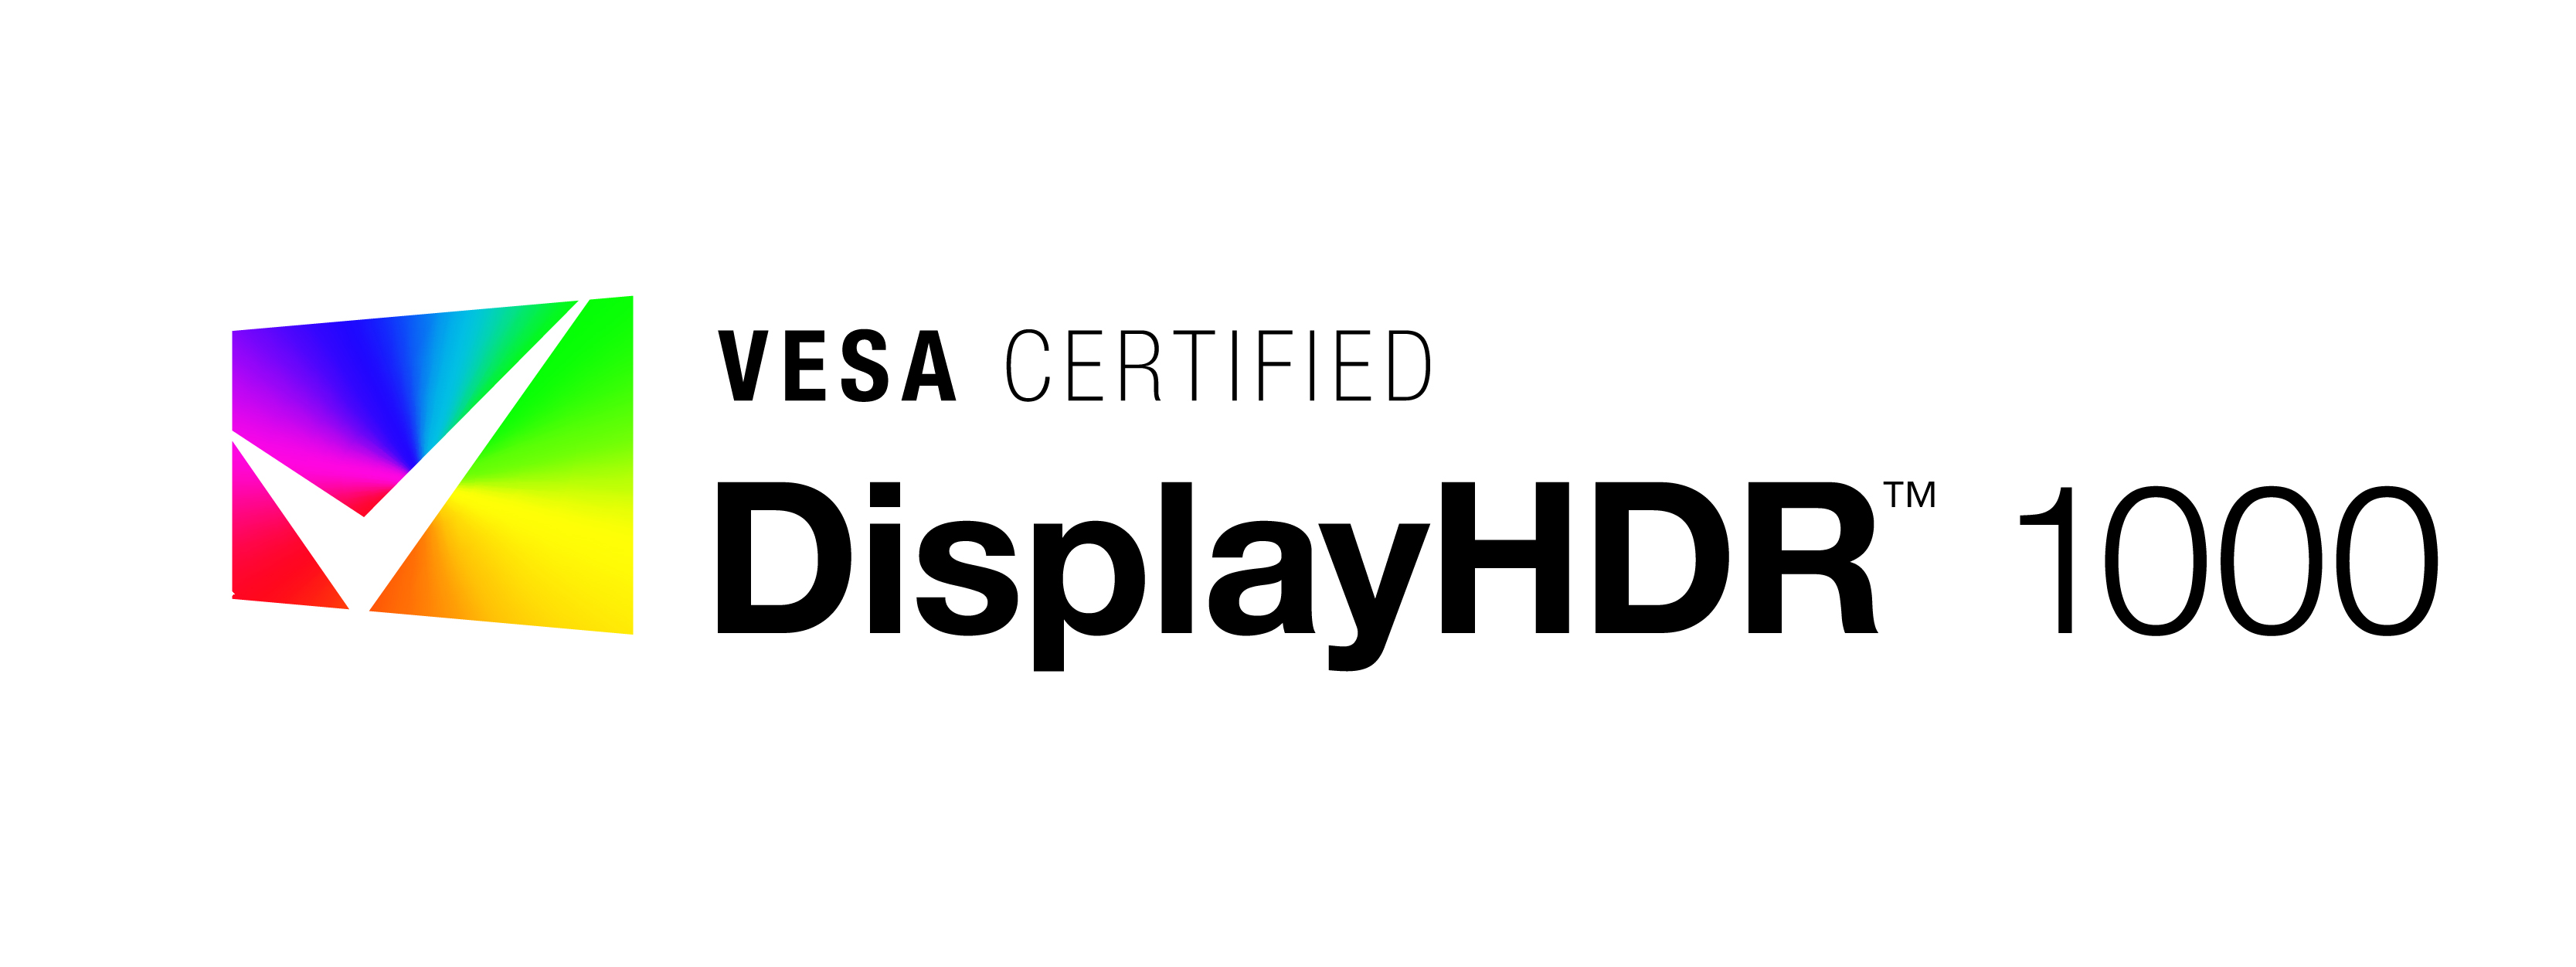 VESA Certified DisplayHDR 1000